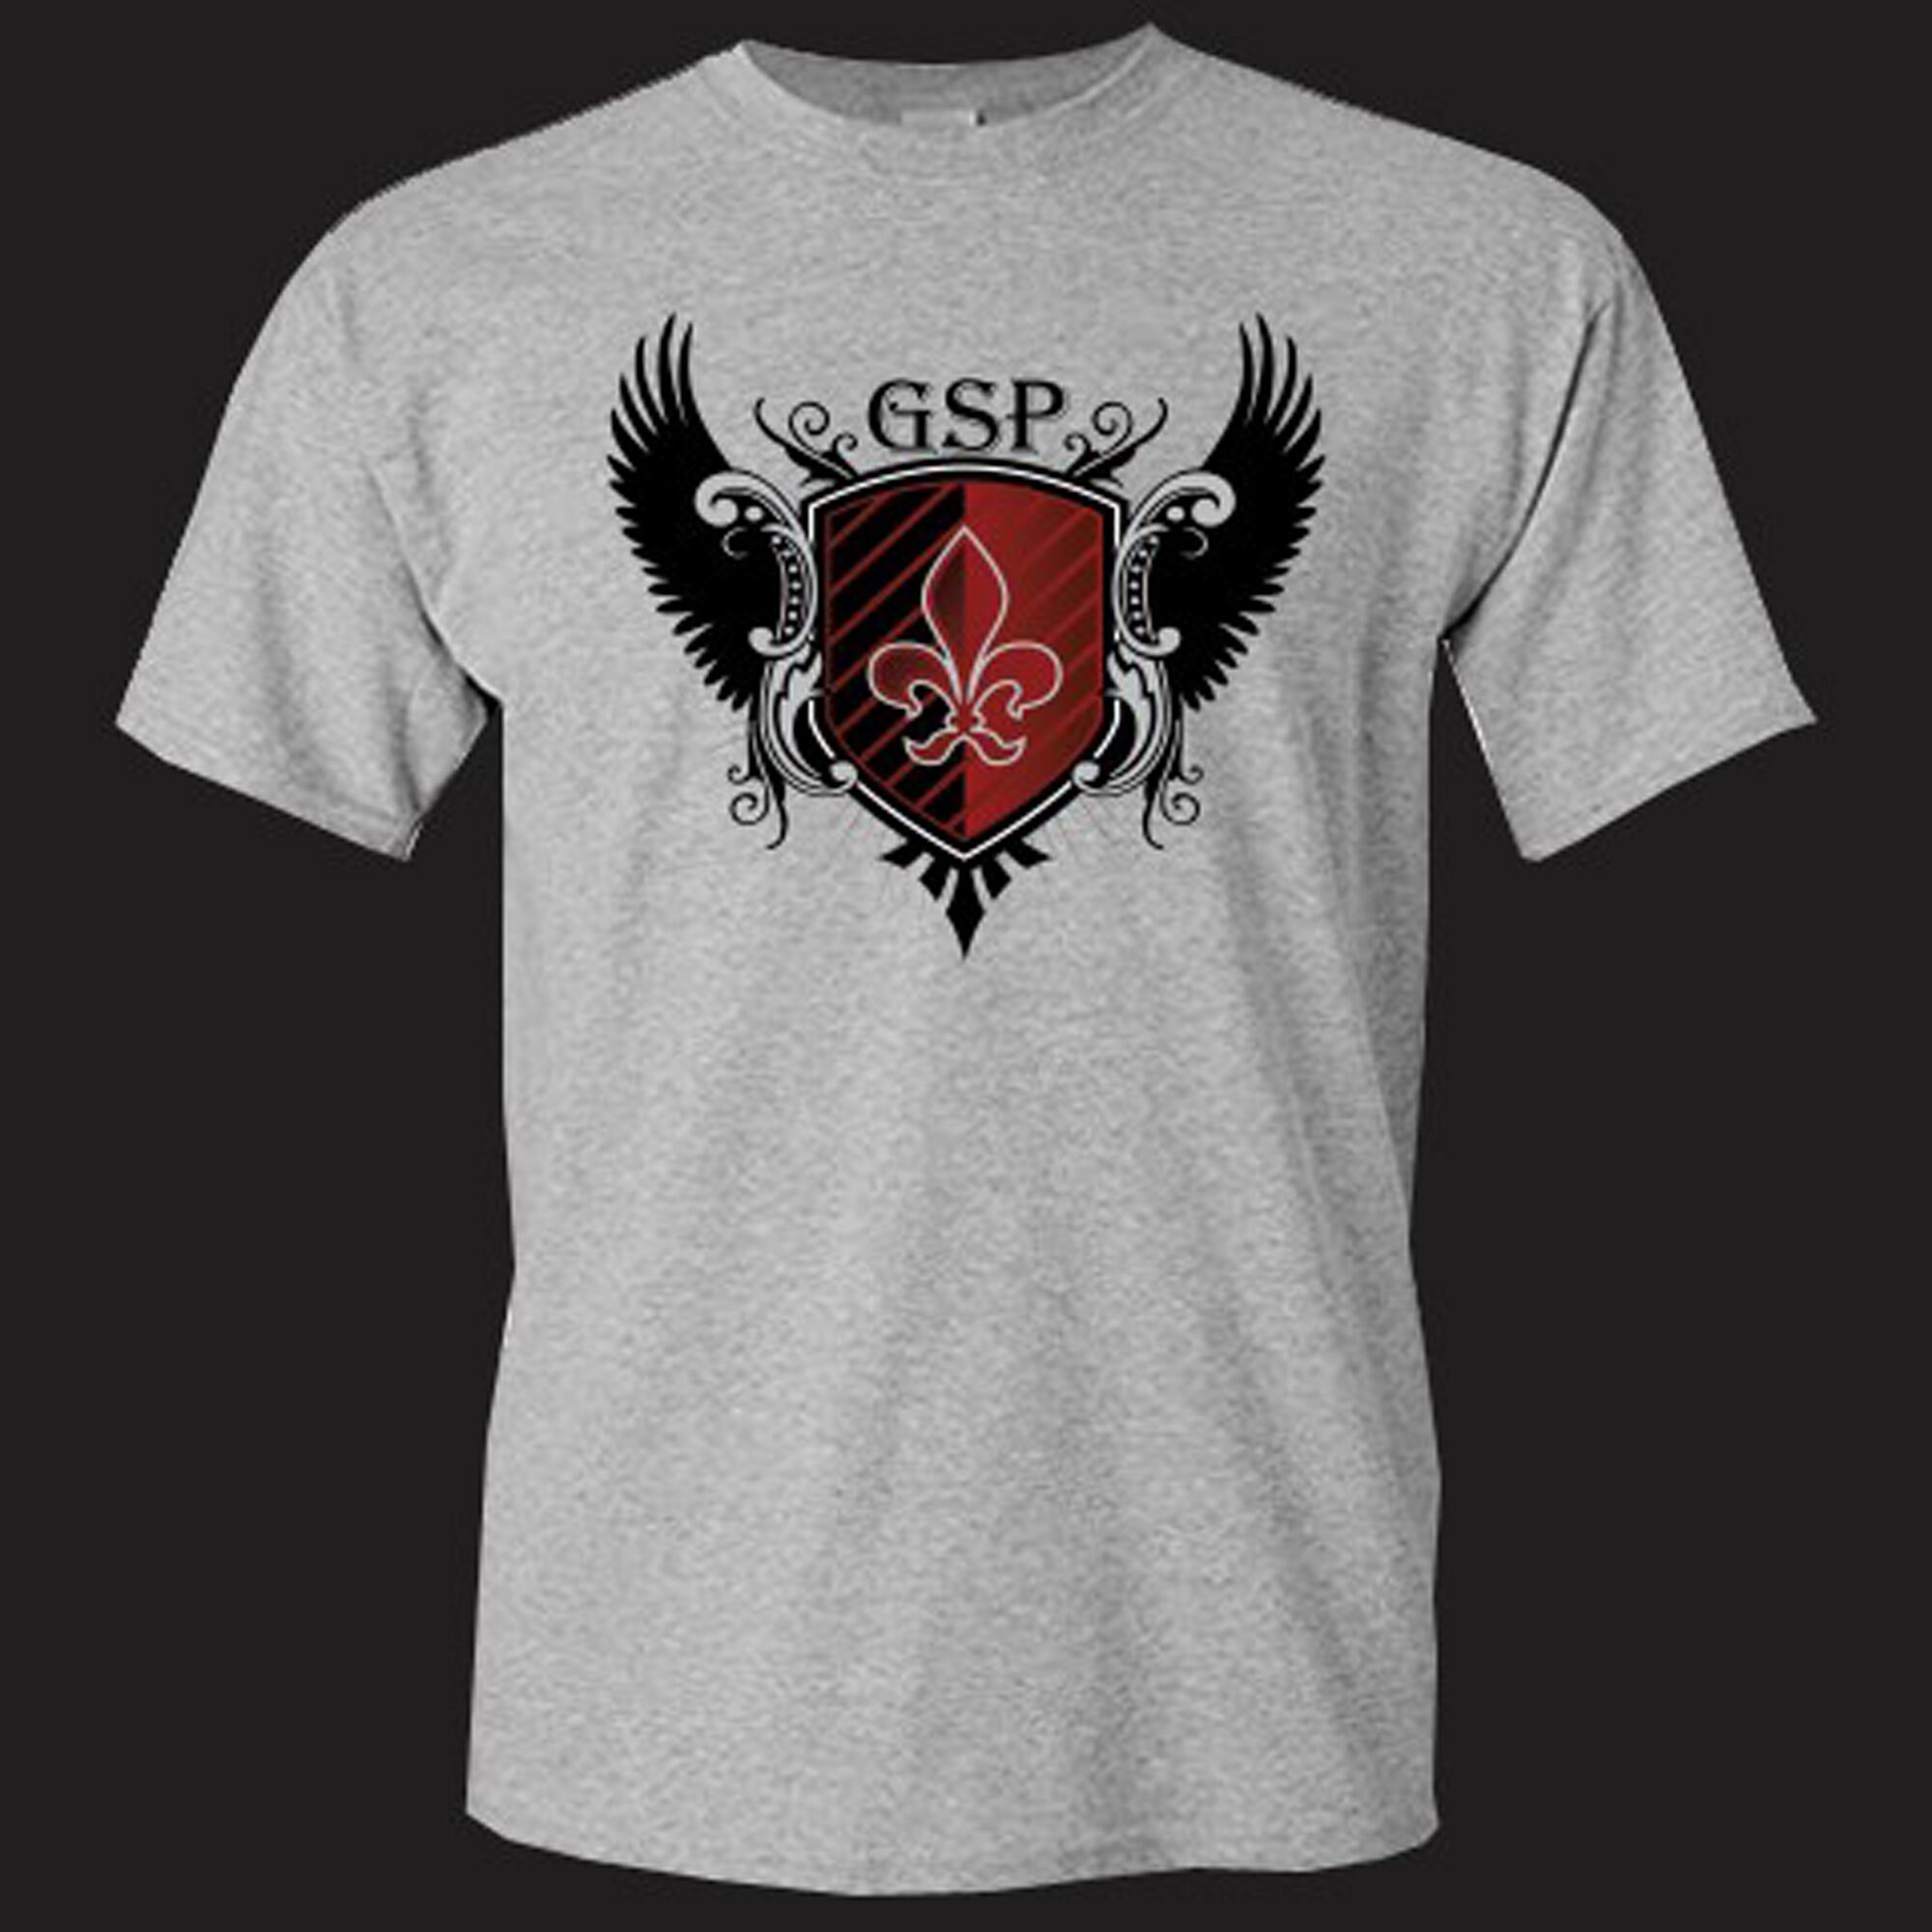 Georges St-Pierre GSP Martial Artist Logo Men's White T-Shirt Size S 3XL 